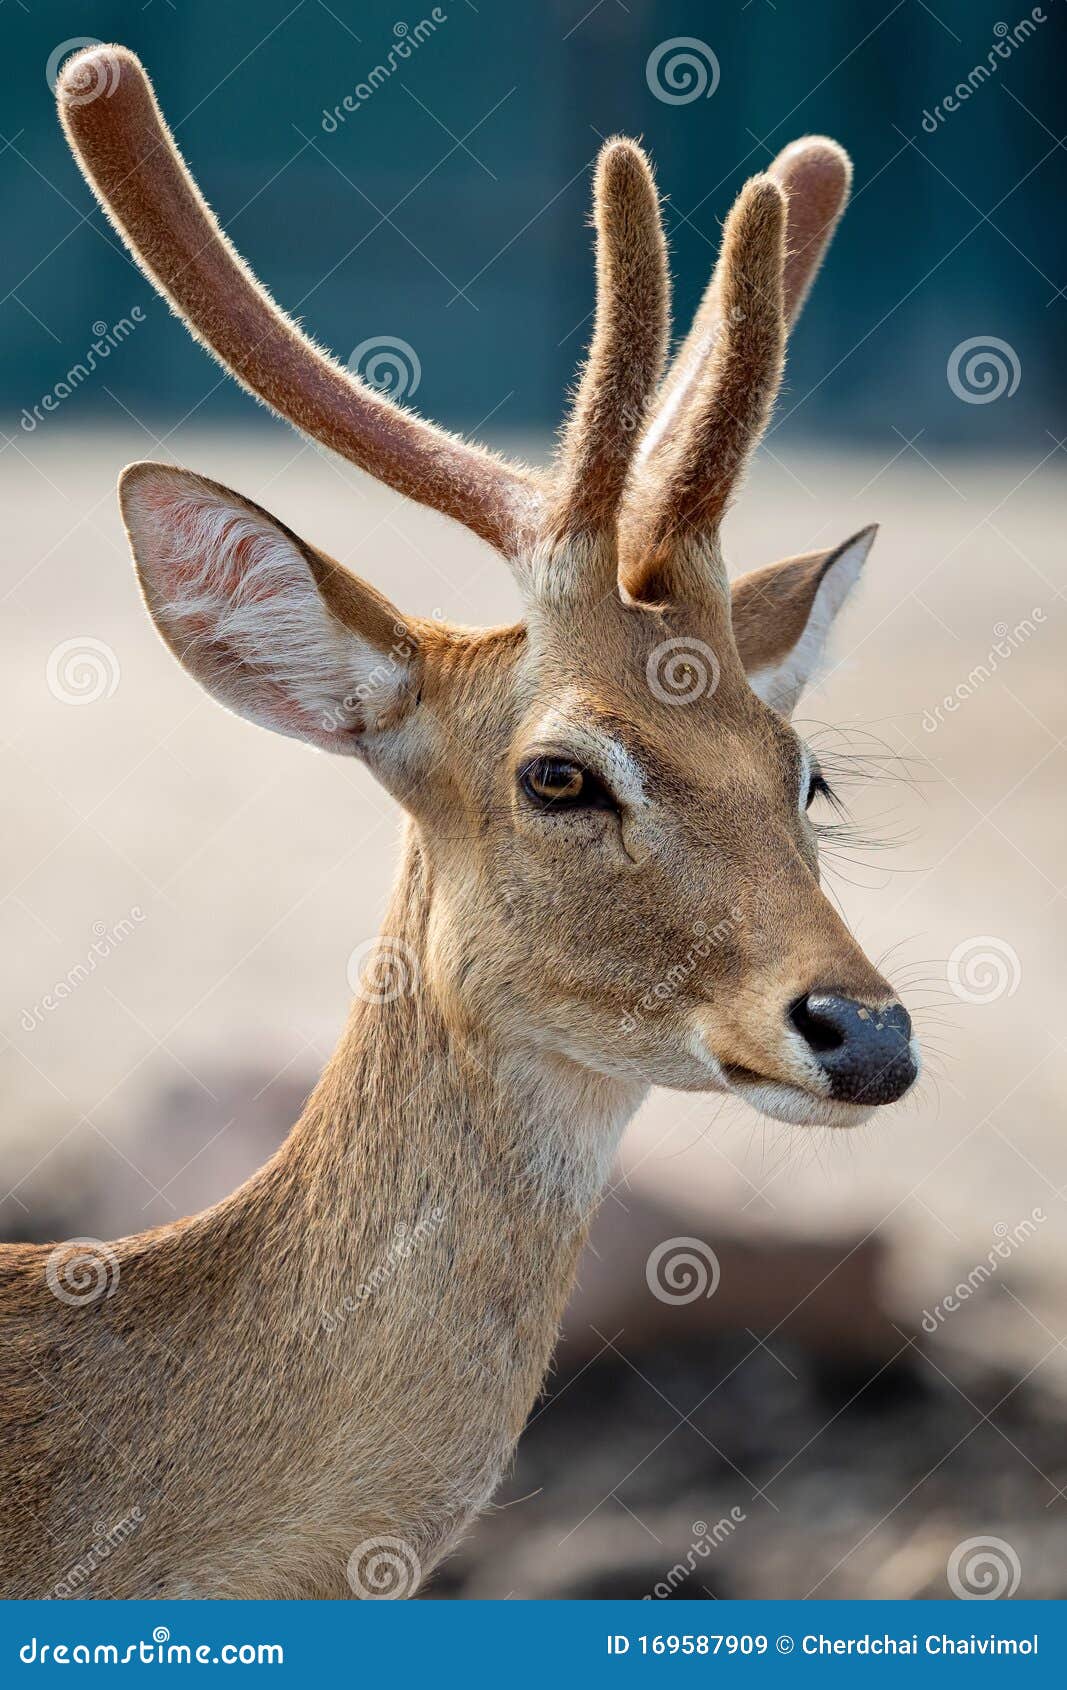 Single horn deer